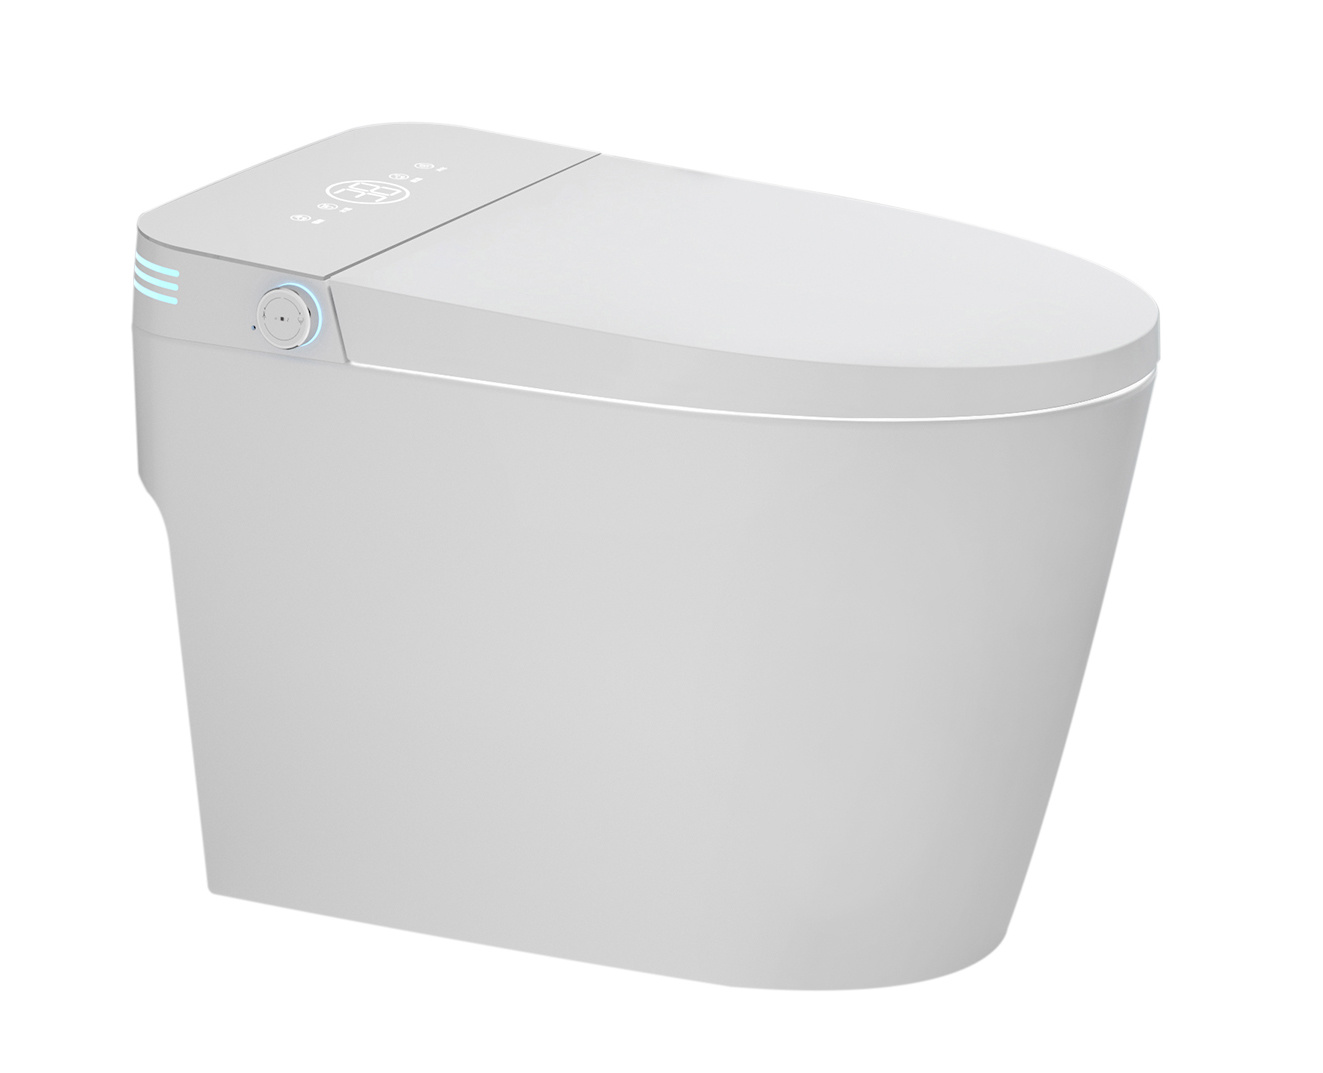 Intelligent smart toilet H-5009